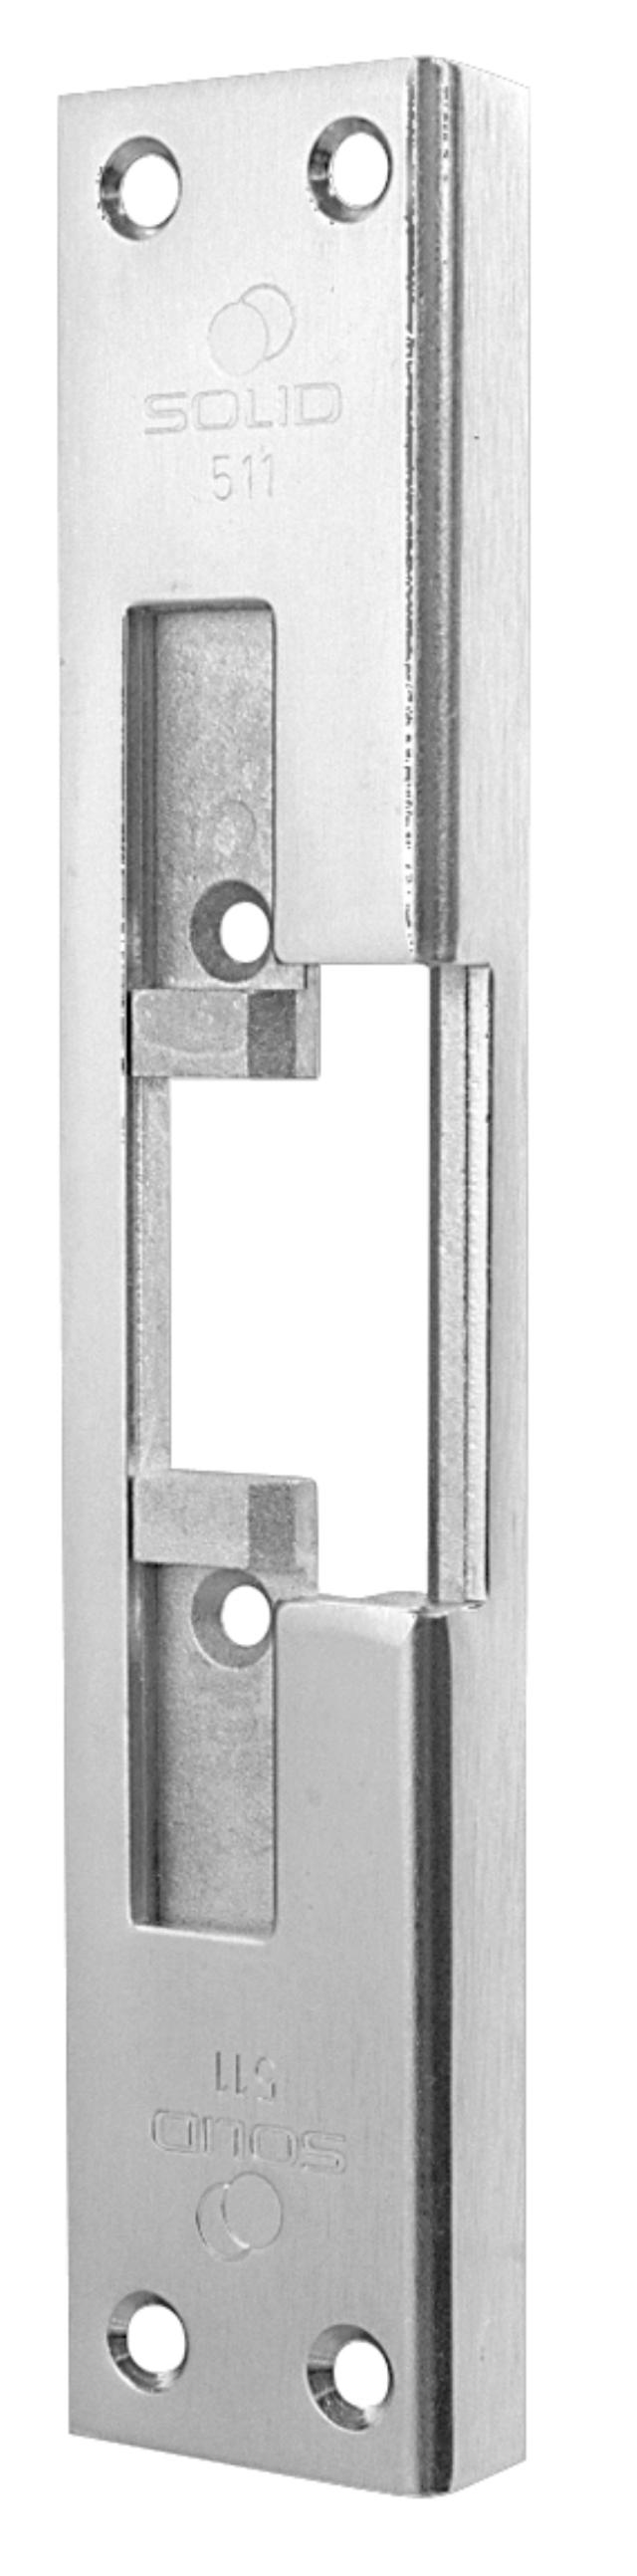 Solid stolpe 511T t/el-slutblik (975290)